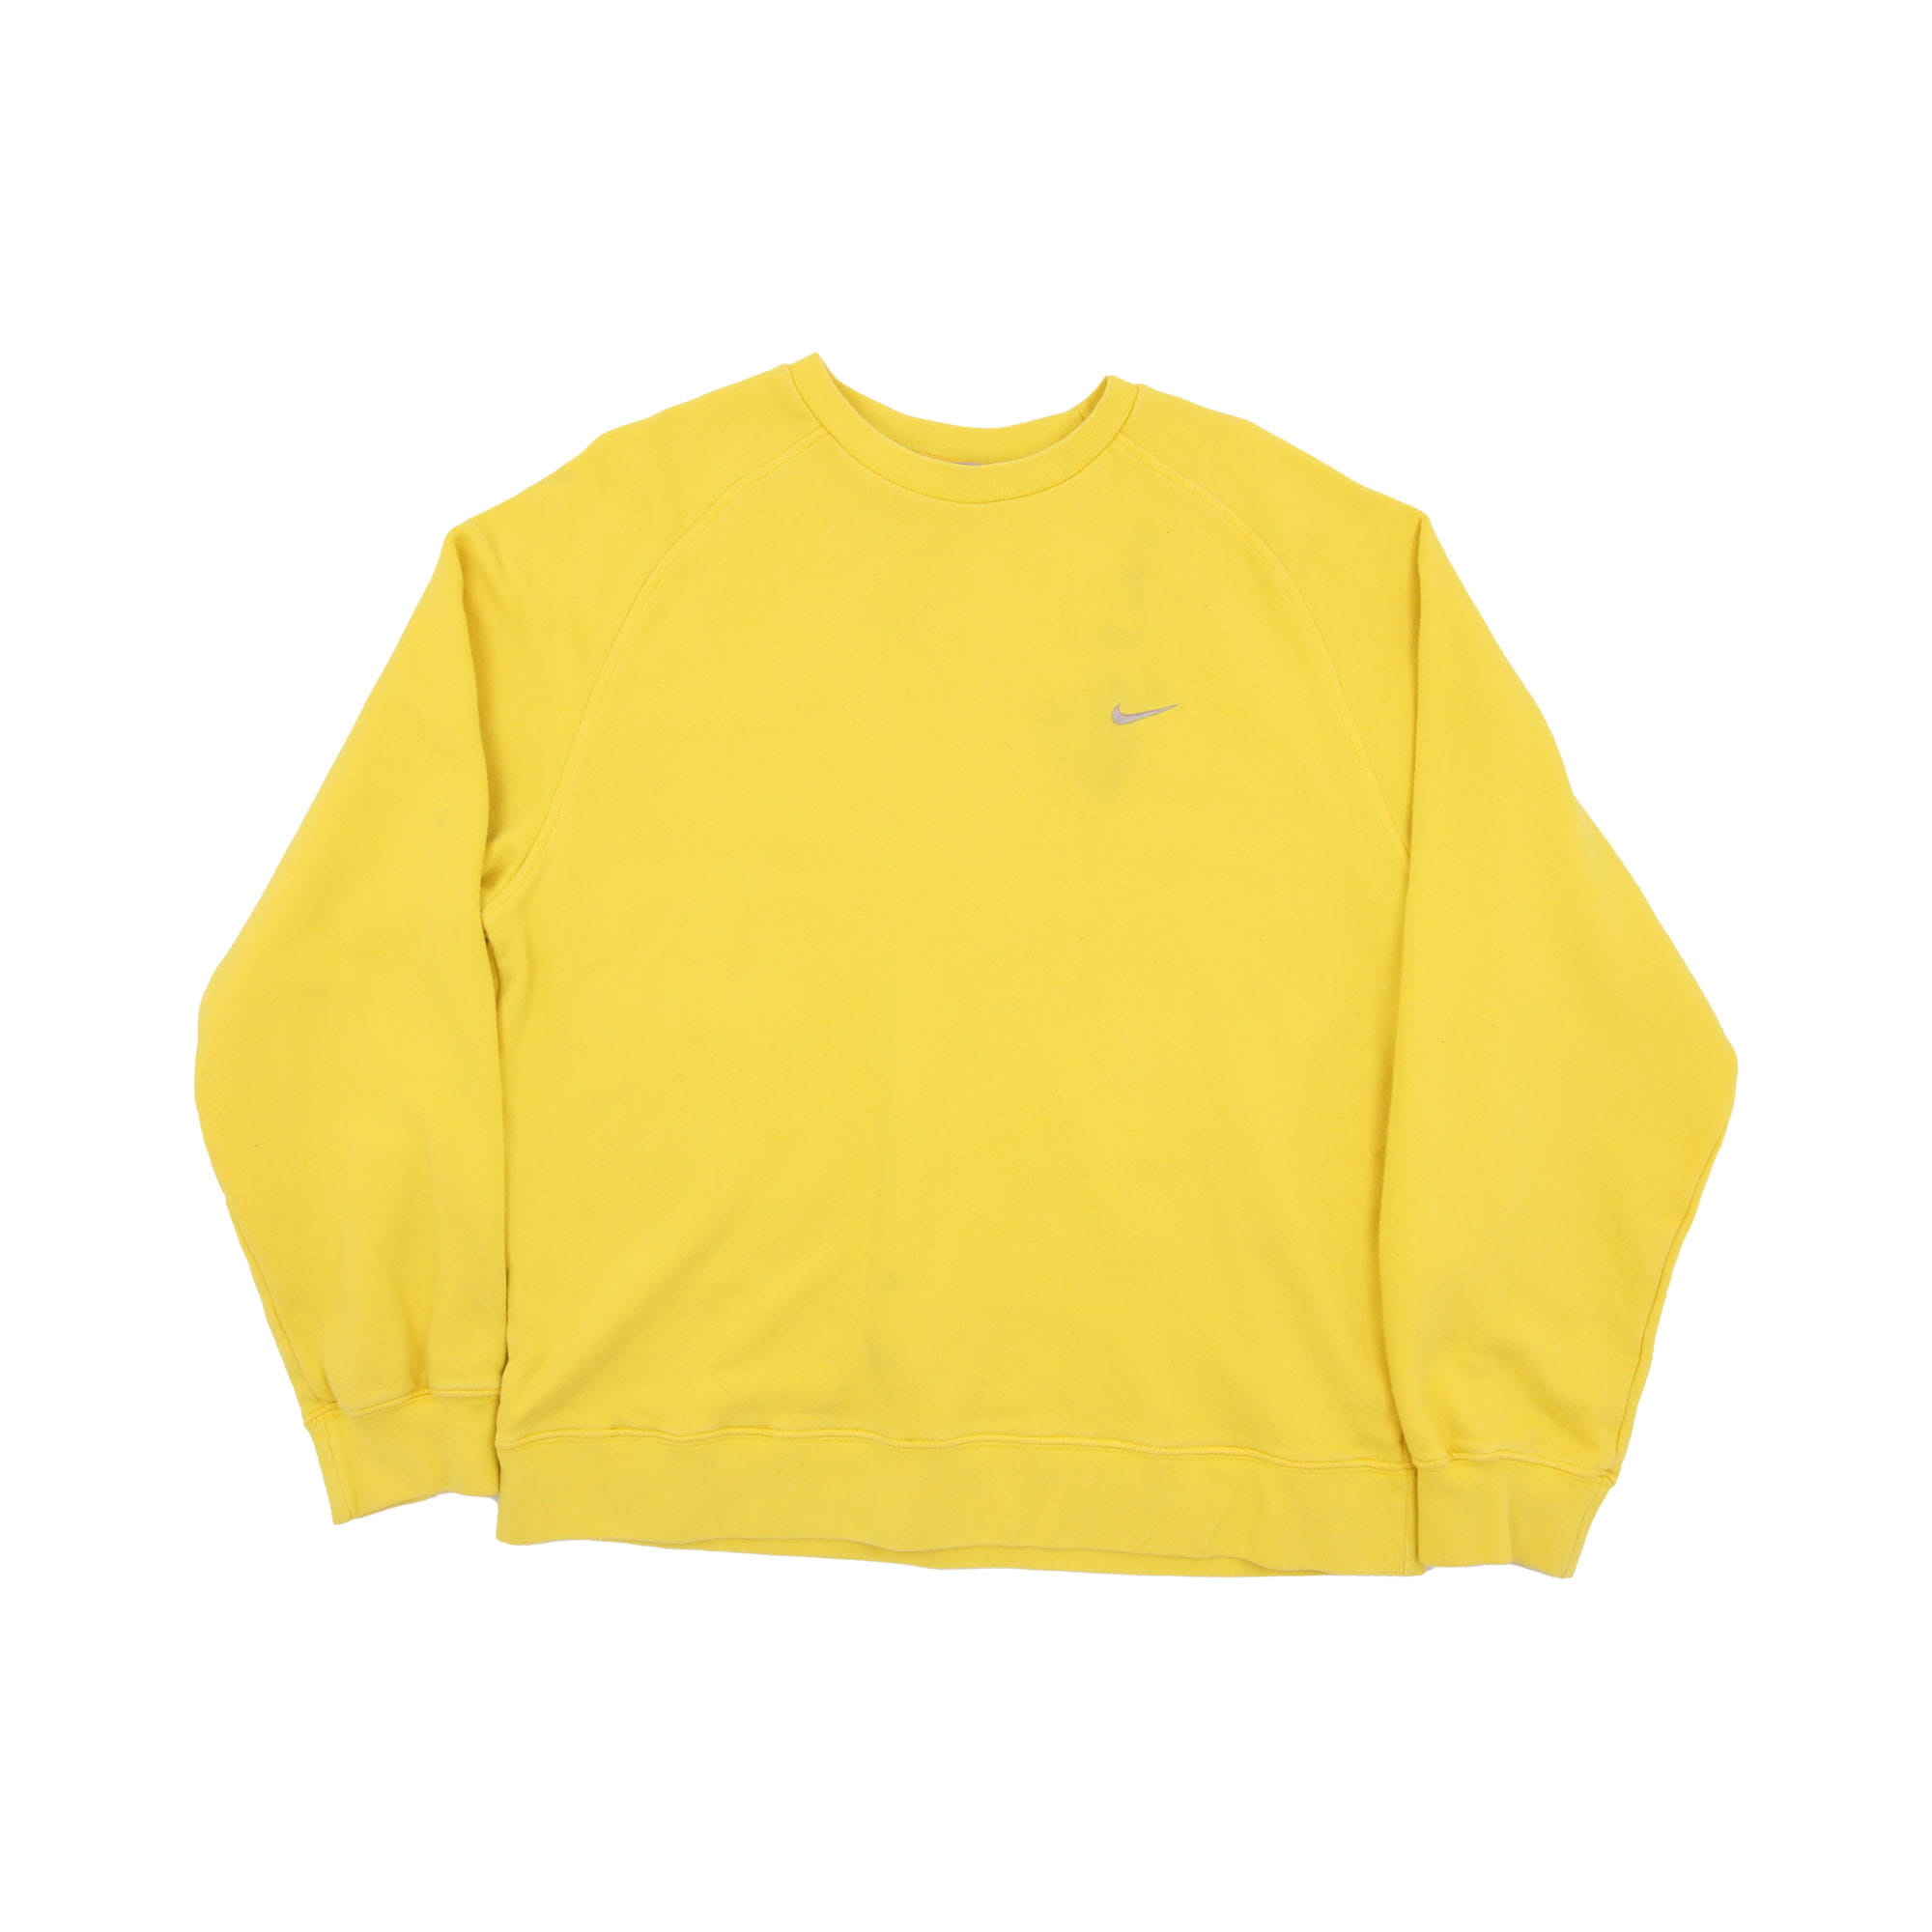 Nike Sweatshirt Yellow -  M/L